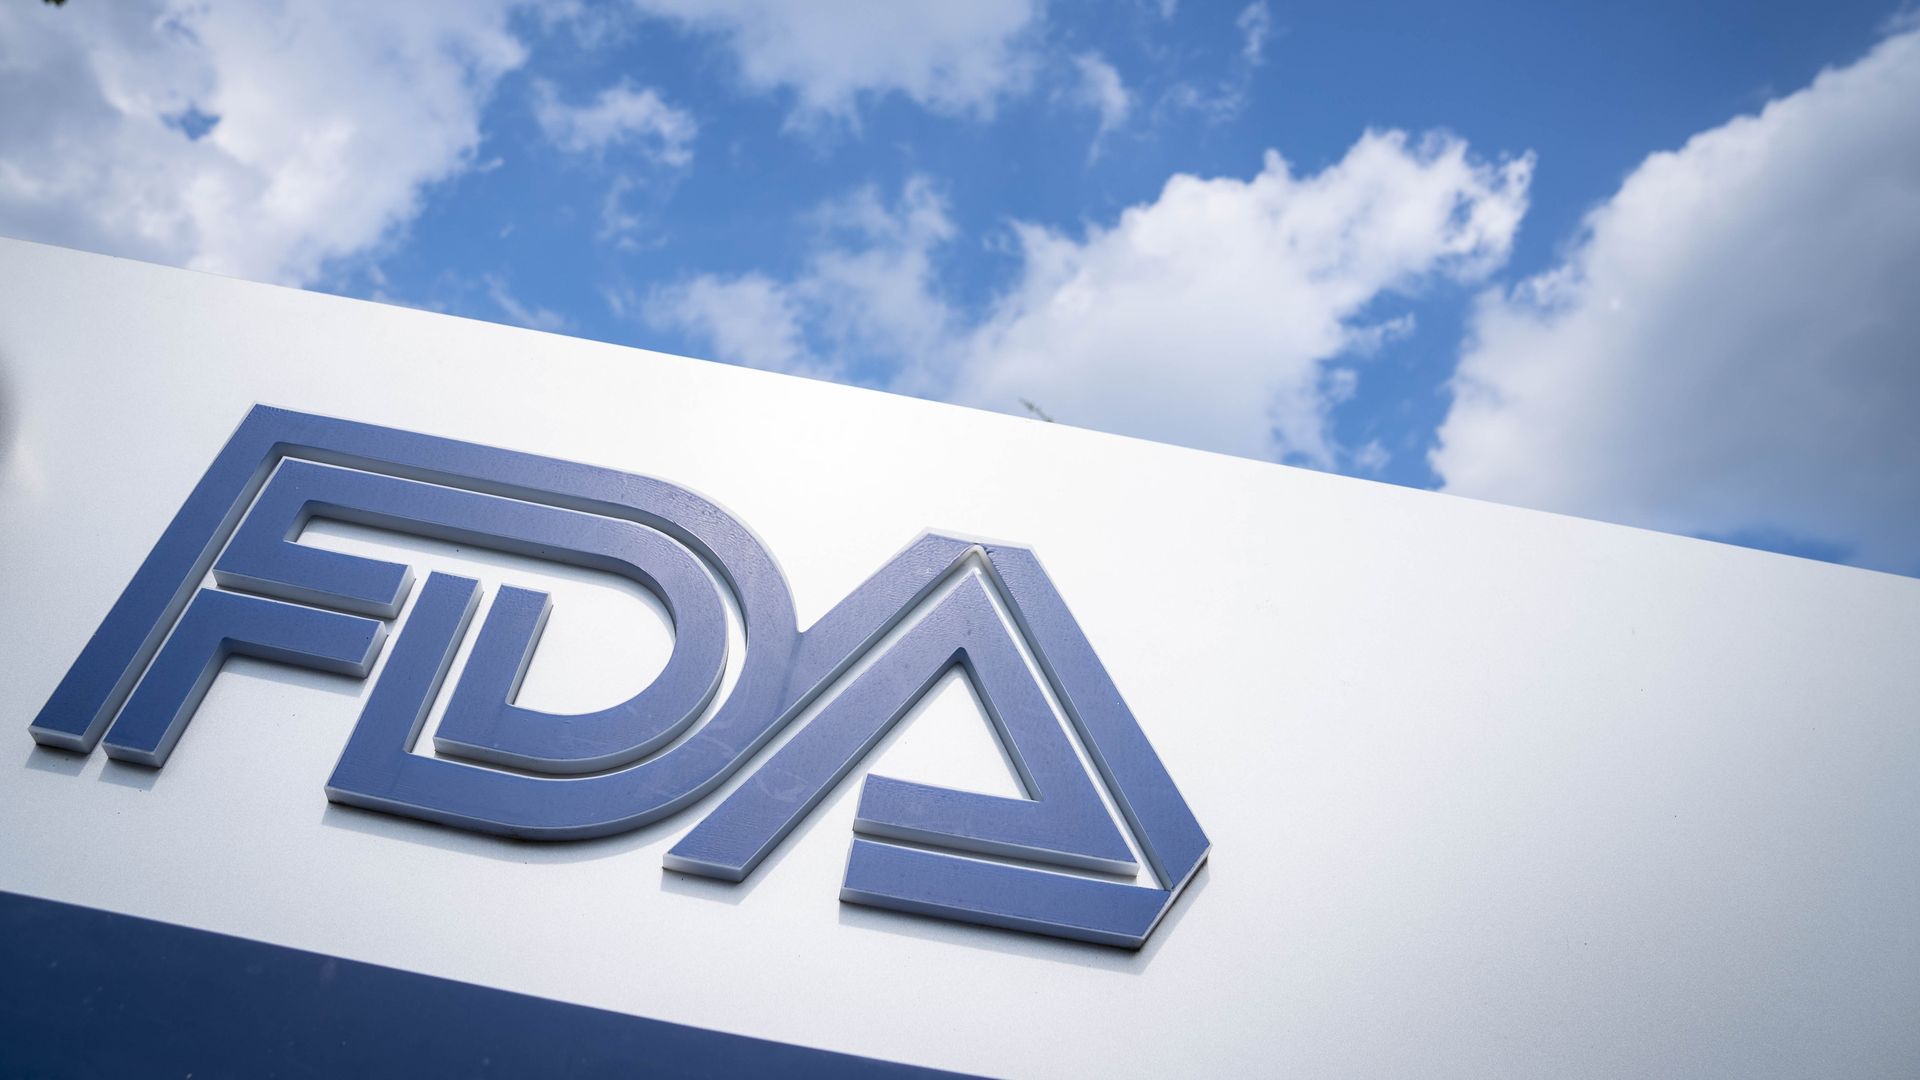 Picture of the FDA logo